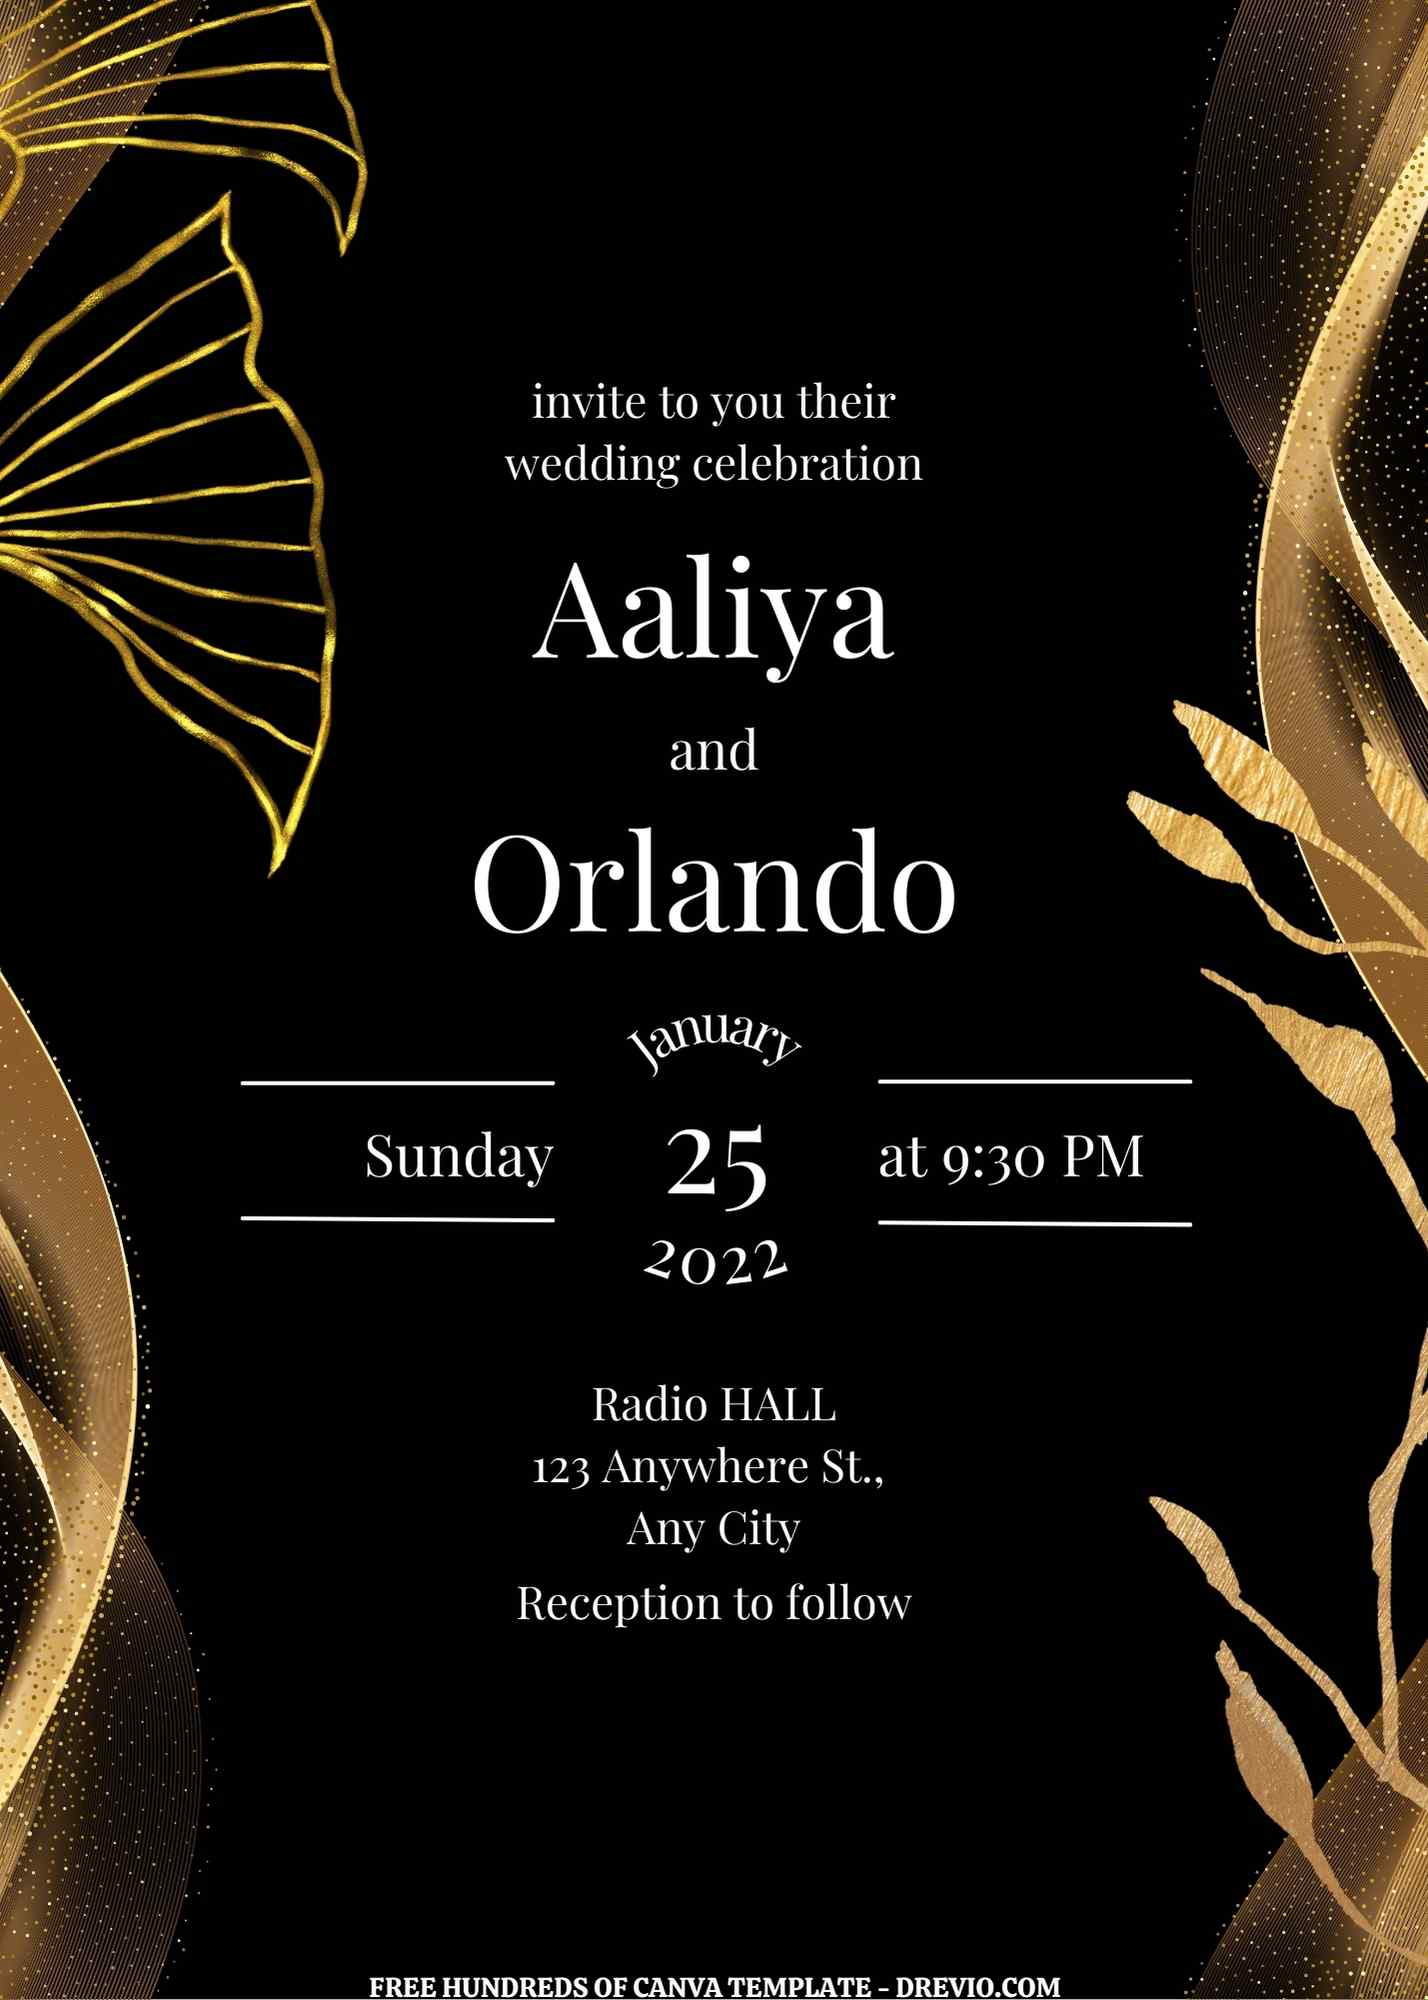 Free) 7+ Gold Floral Gold Black Background Canva Wedding Invitation  Templates | Download Hundreds FREE PRINTABLE Birthday Invitation Templates